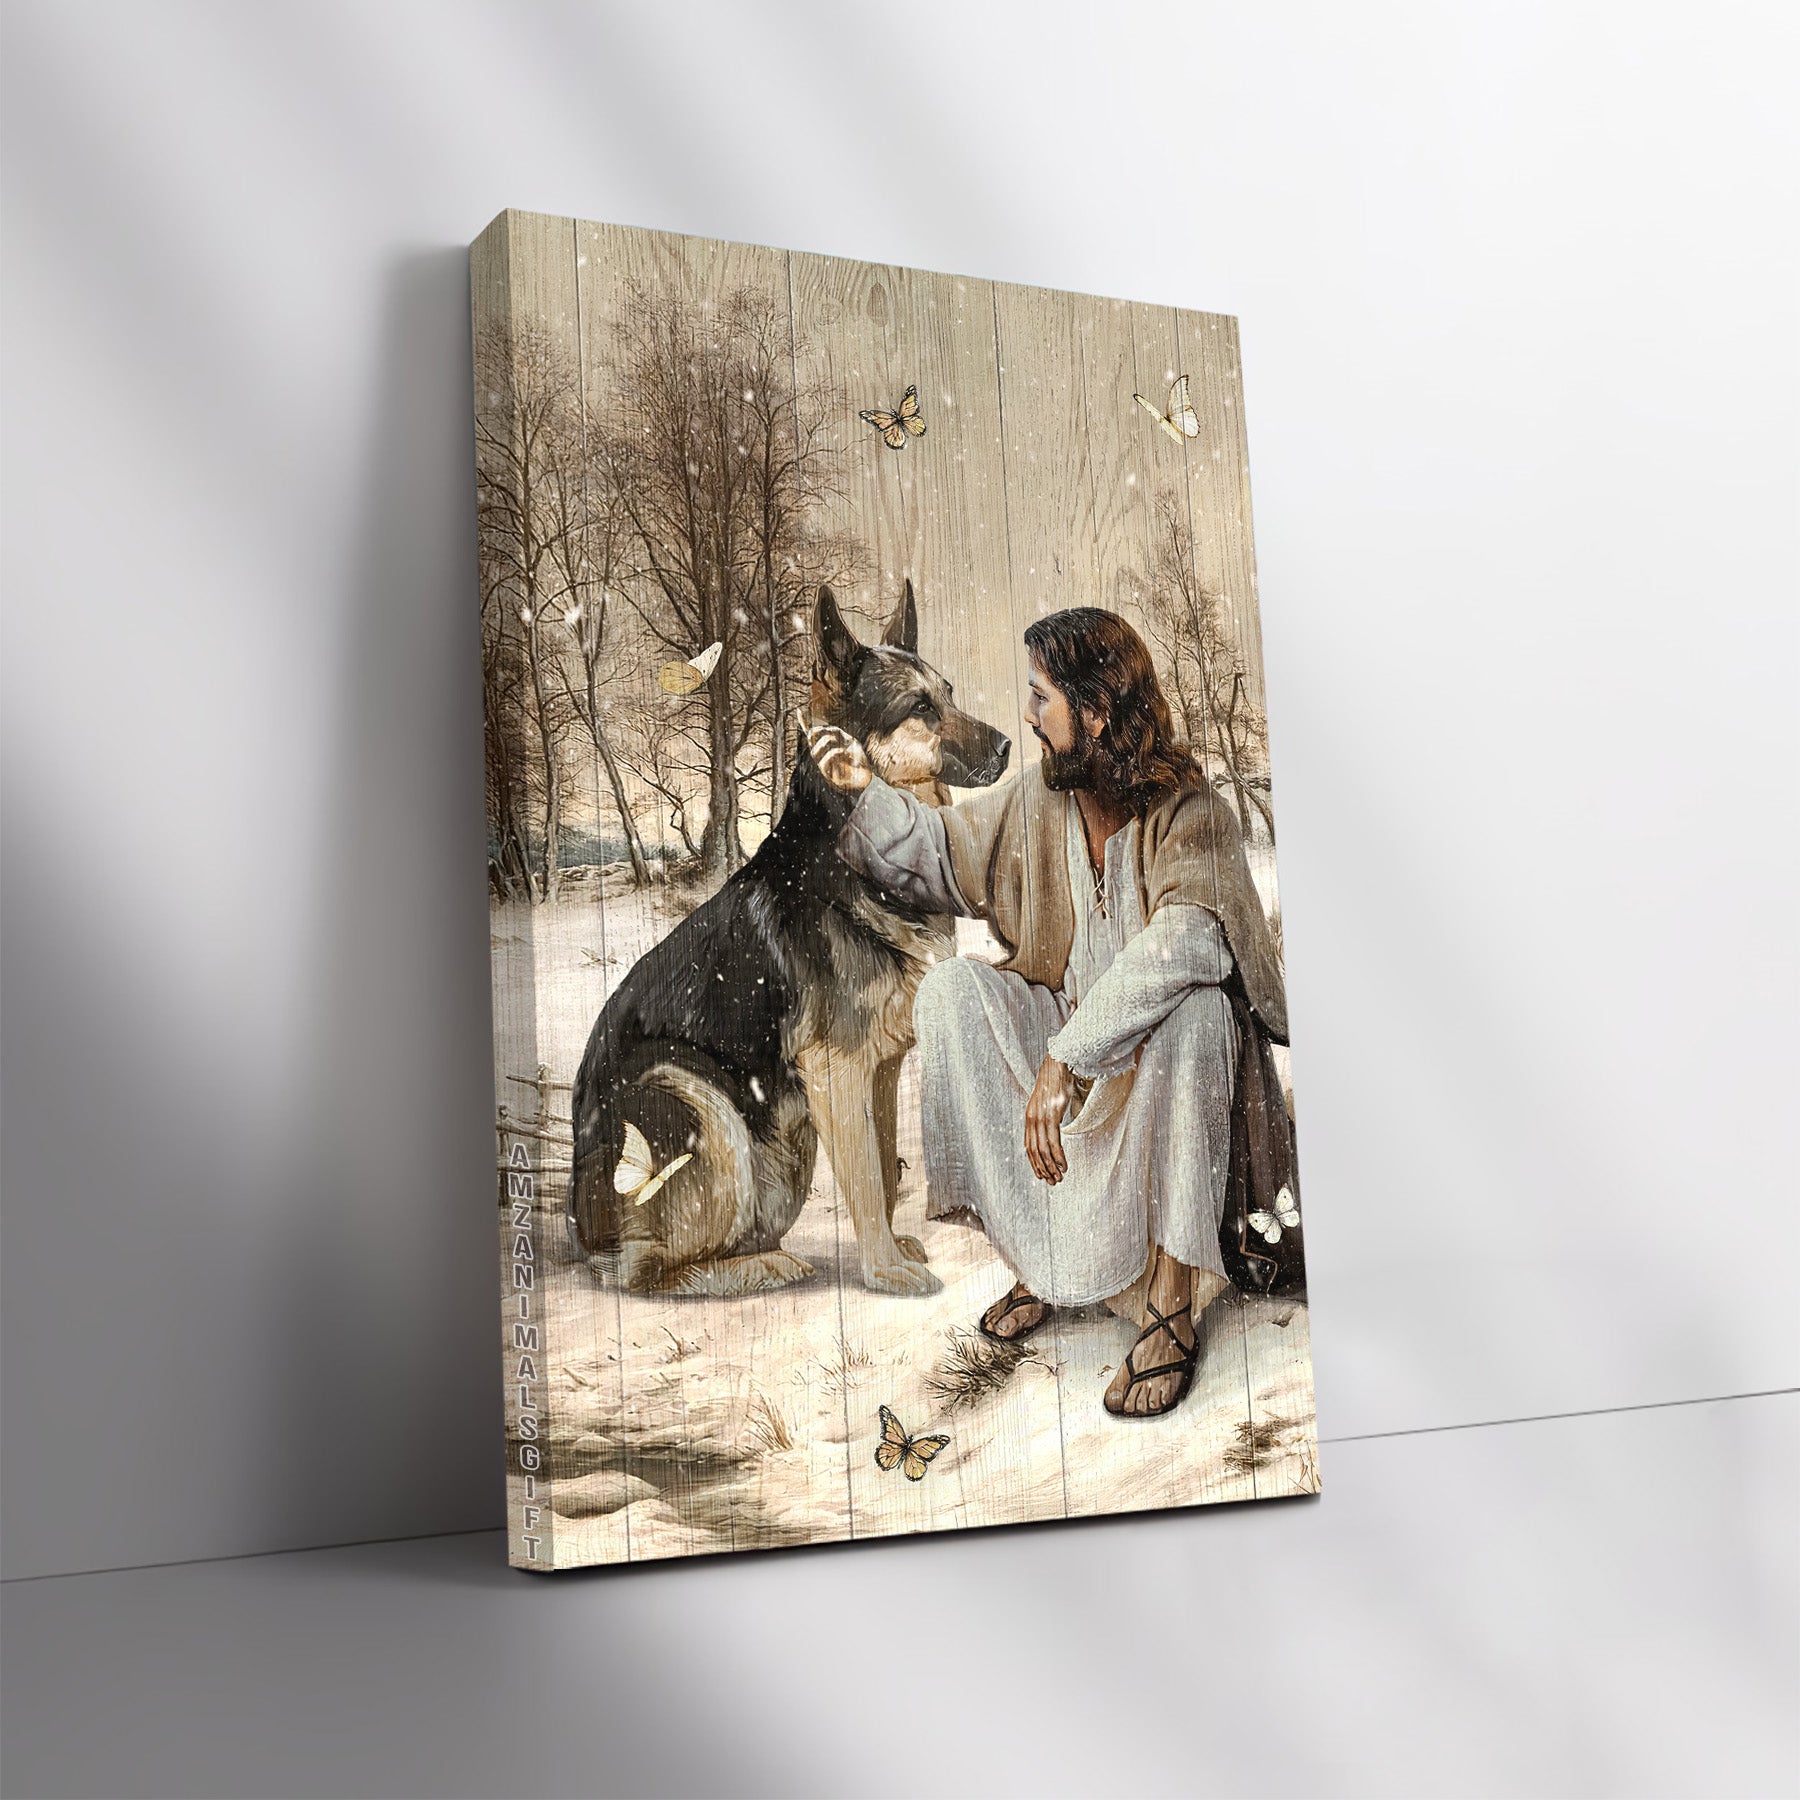 German Shepherd & Jesus Premium Wrapped Portrait Canvas - Vintage Artwork, Lovely German Shepherd, The Passion Of Jesus - Gift For Christian